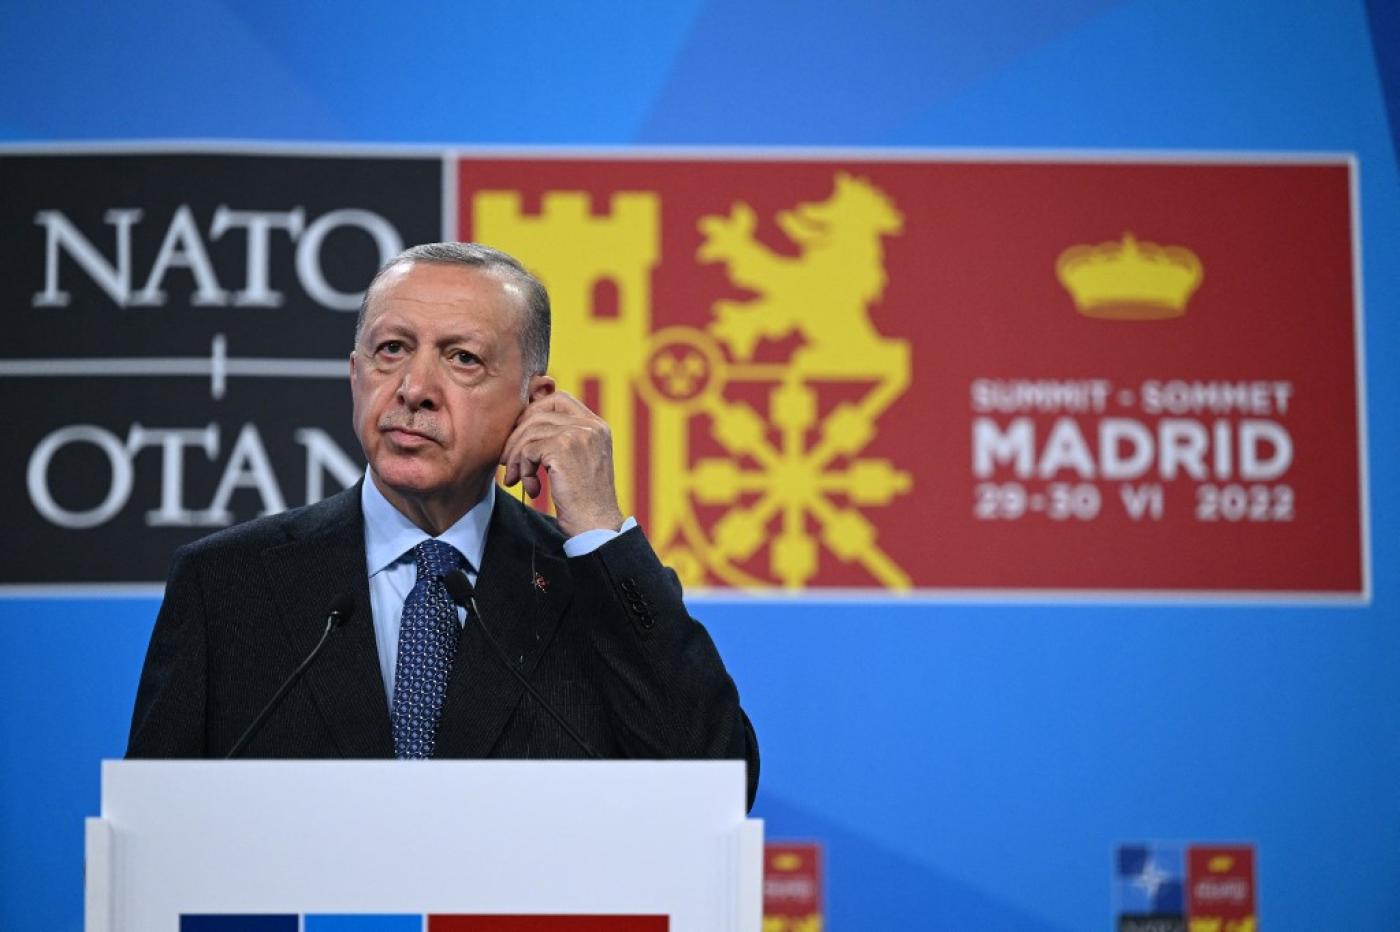 Turkey's President Recep Tayyip Erdogan addresses media representatives during a press conference